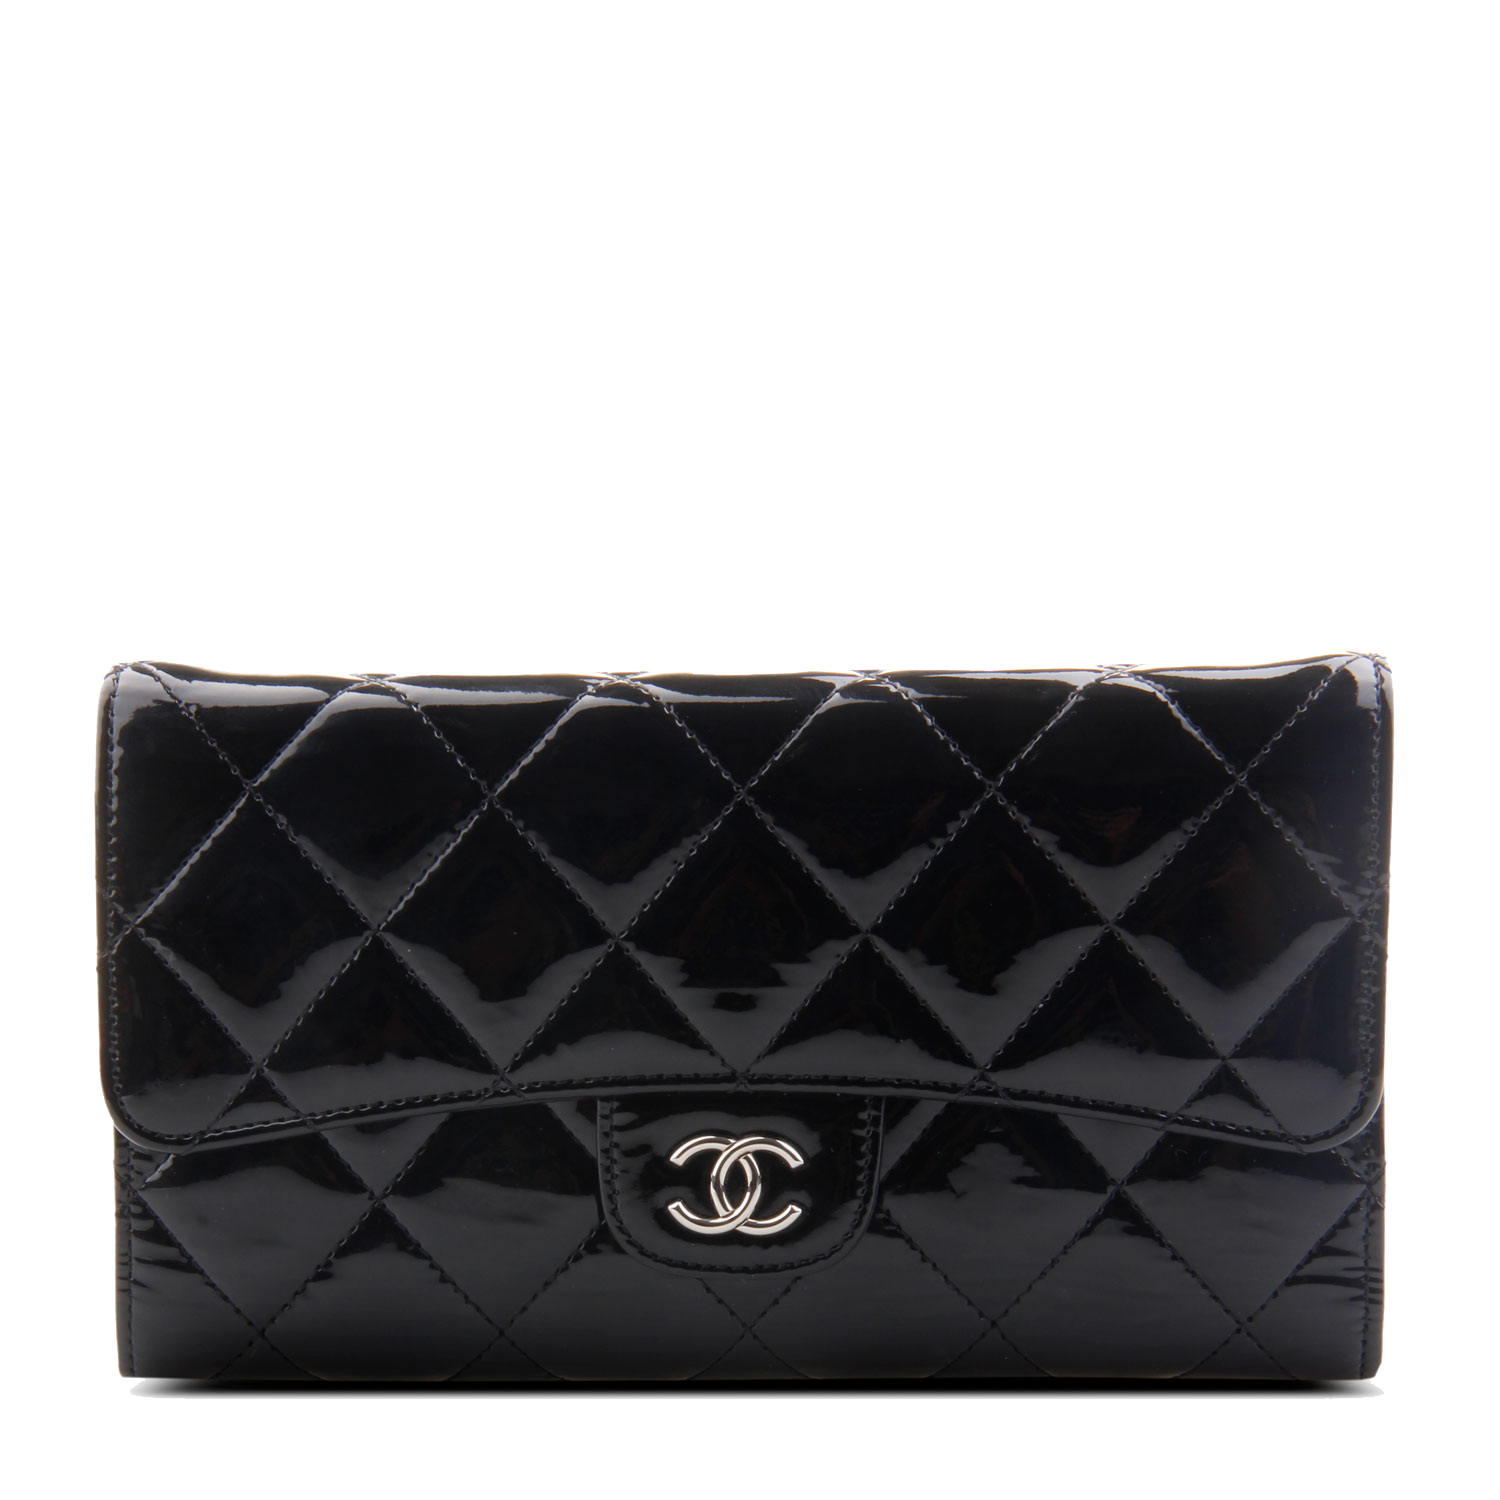 Download Patent Leather Purse Wallet Black Handbag Chanel HQ PNG Image ...